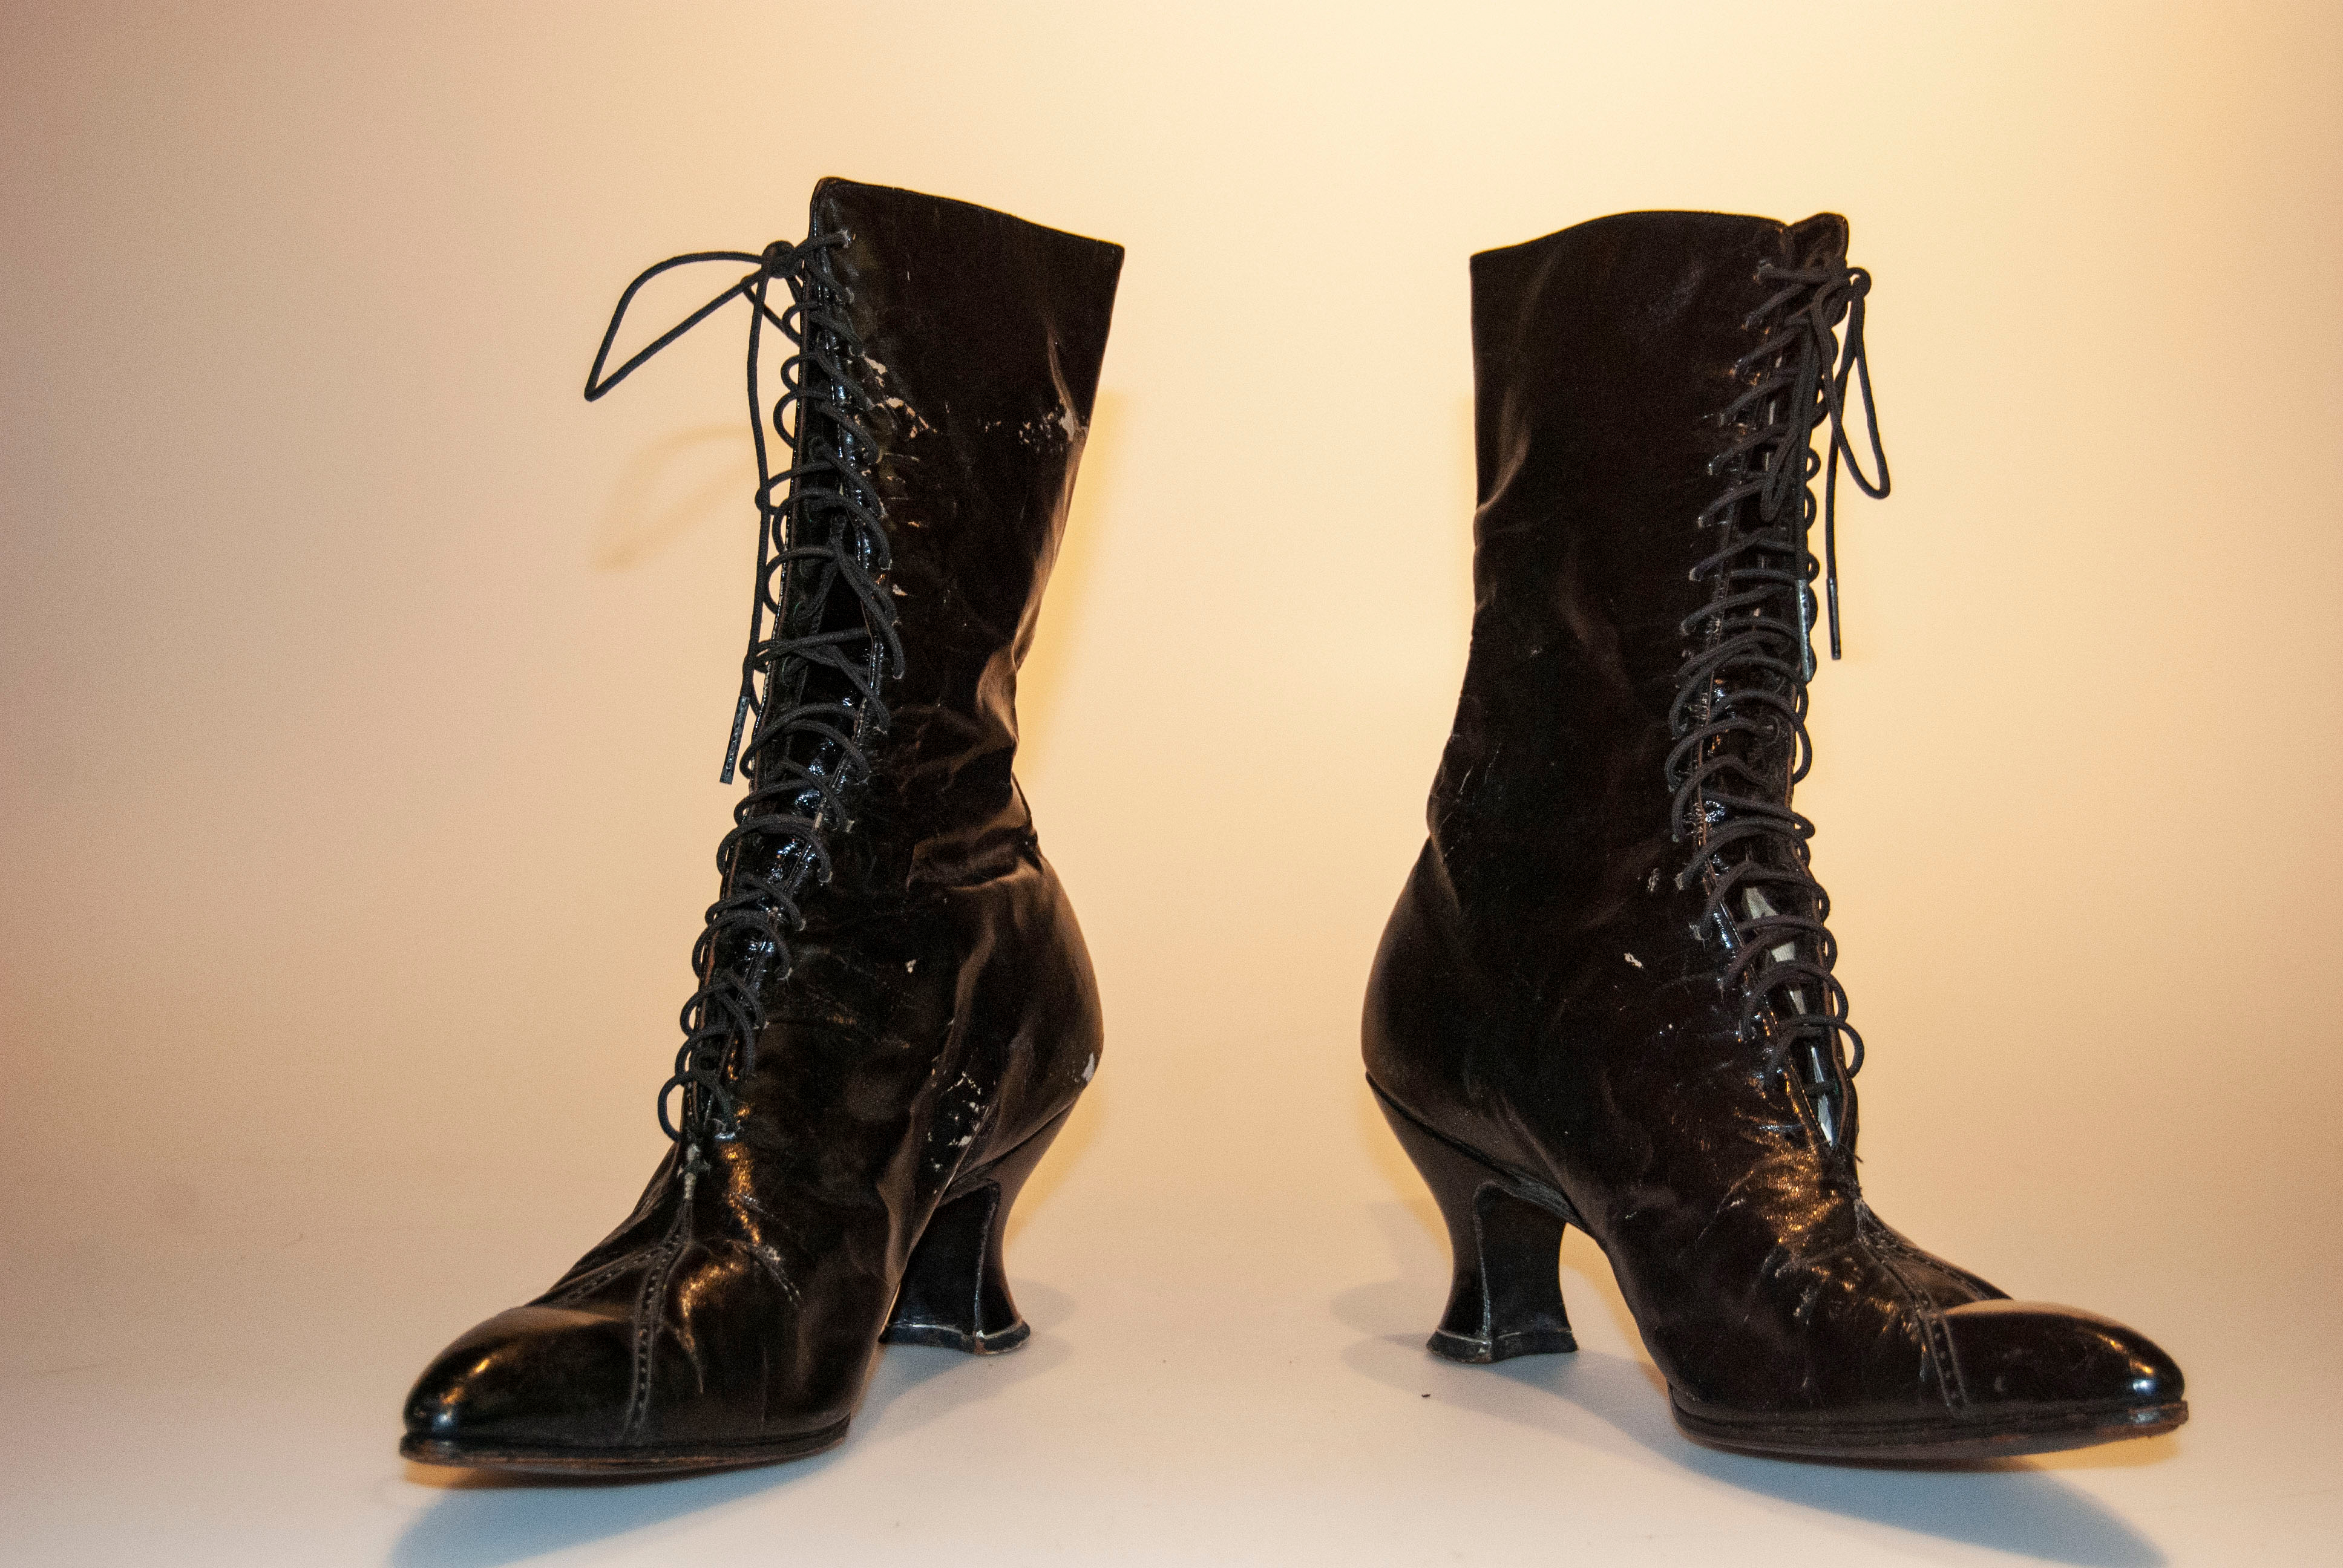 1920s women's boots